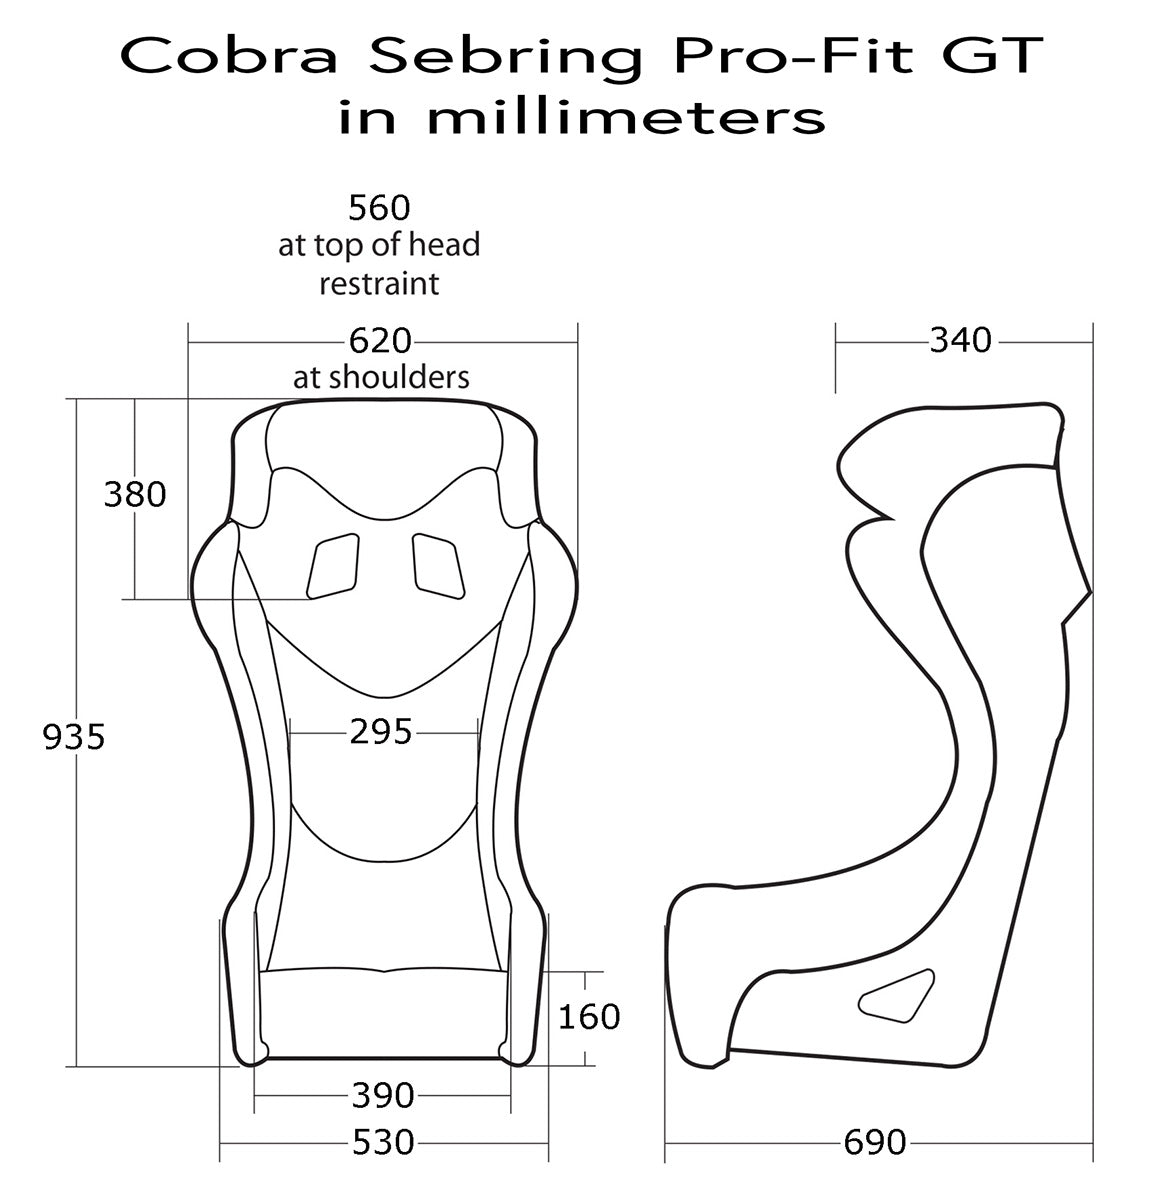 Cobra Sebring Pro-Fit Racing Seat dimensions 2